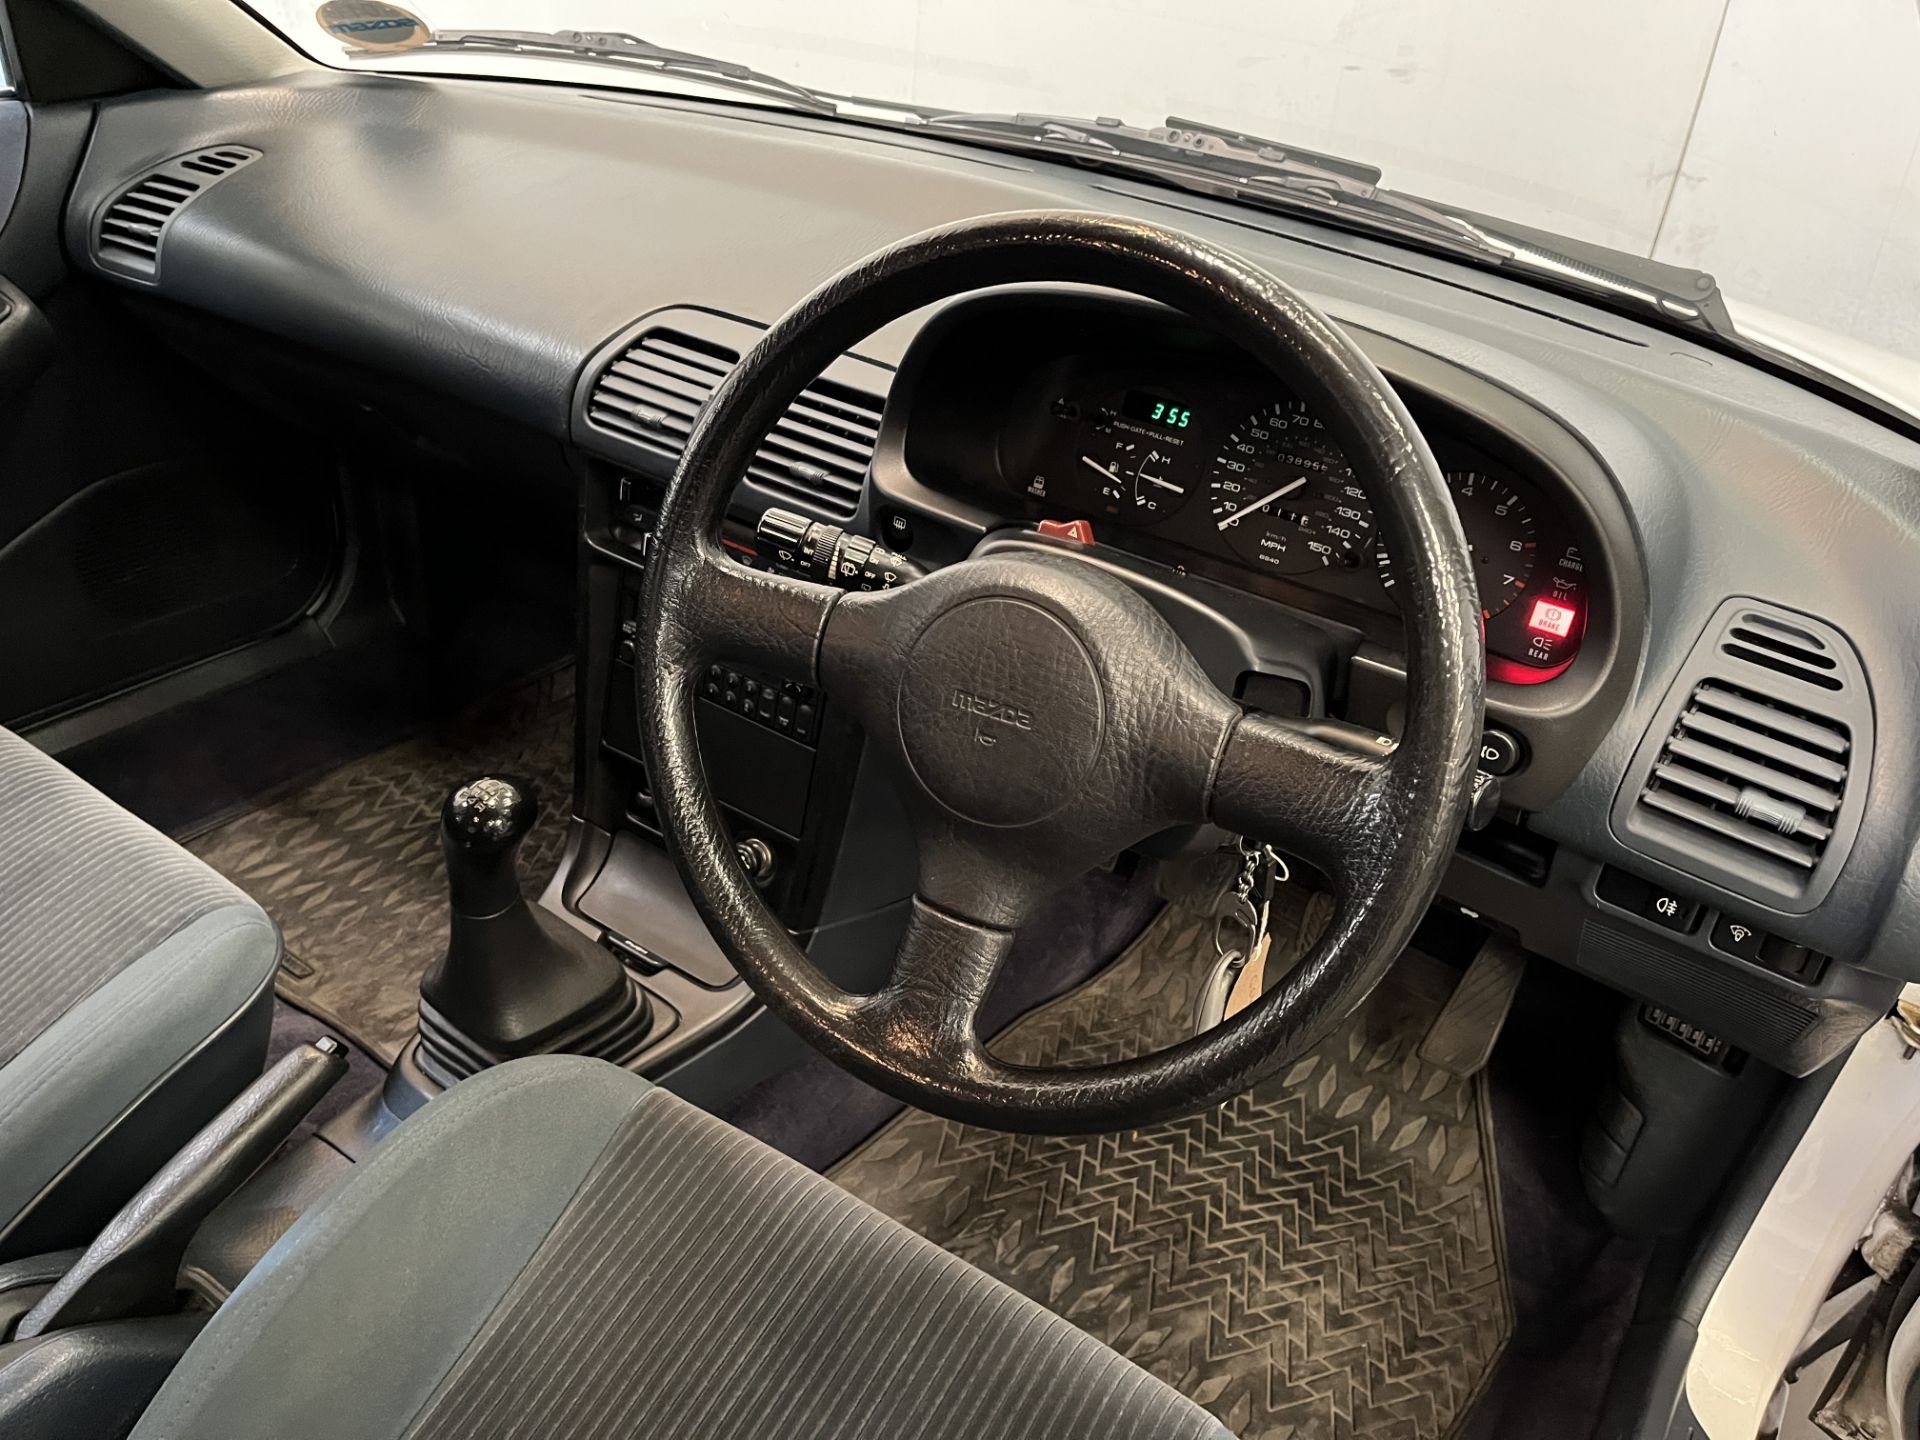 1990 Mazda 323 SE Executive - 1598cc - Image 12 of 24